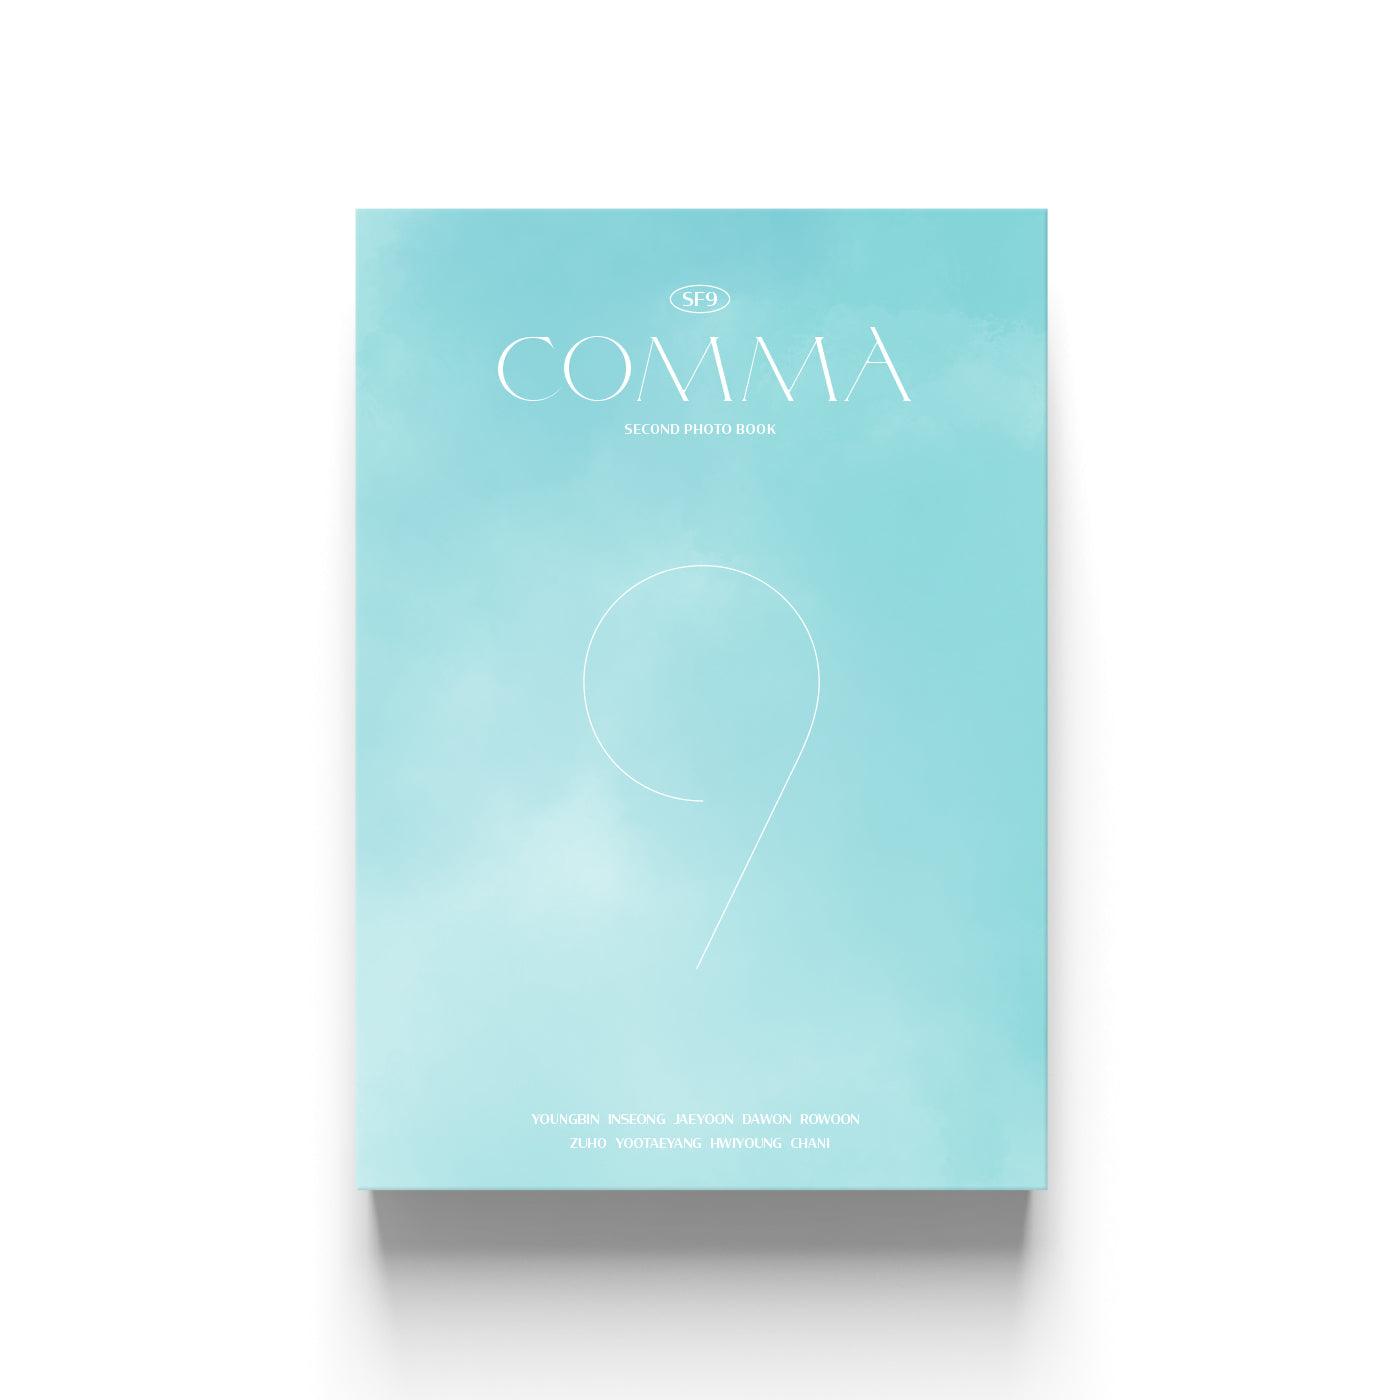 SF9 2ND PHOTO BOOK 'COMMA' COVER